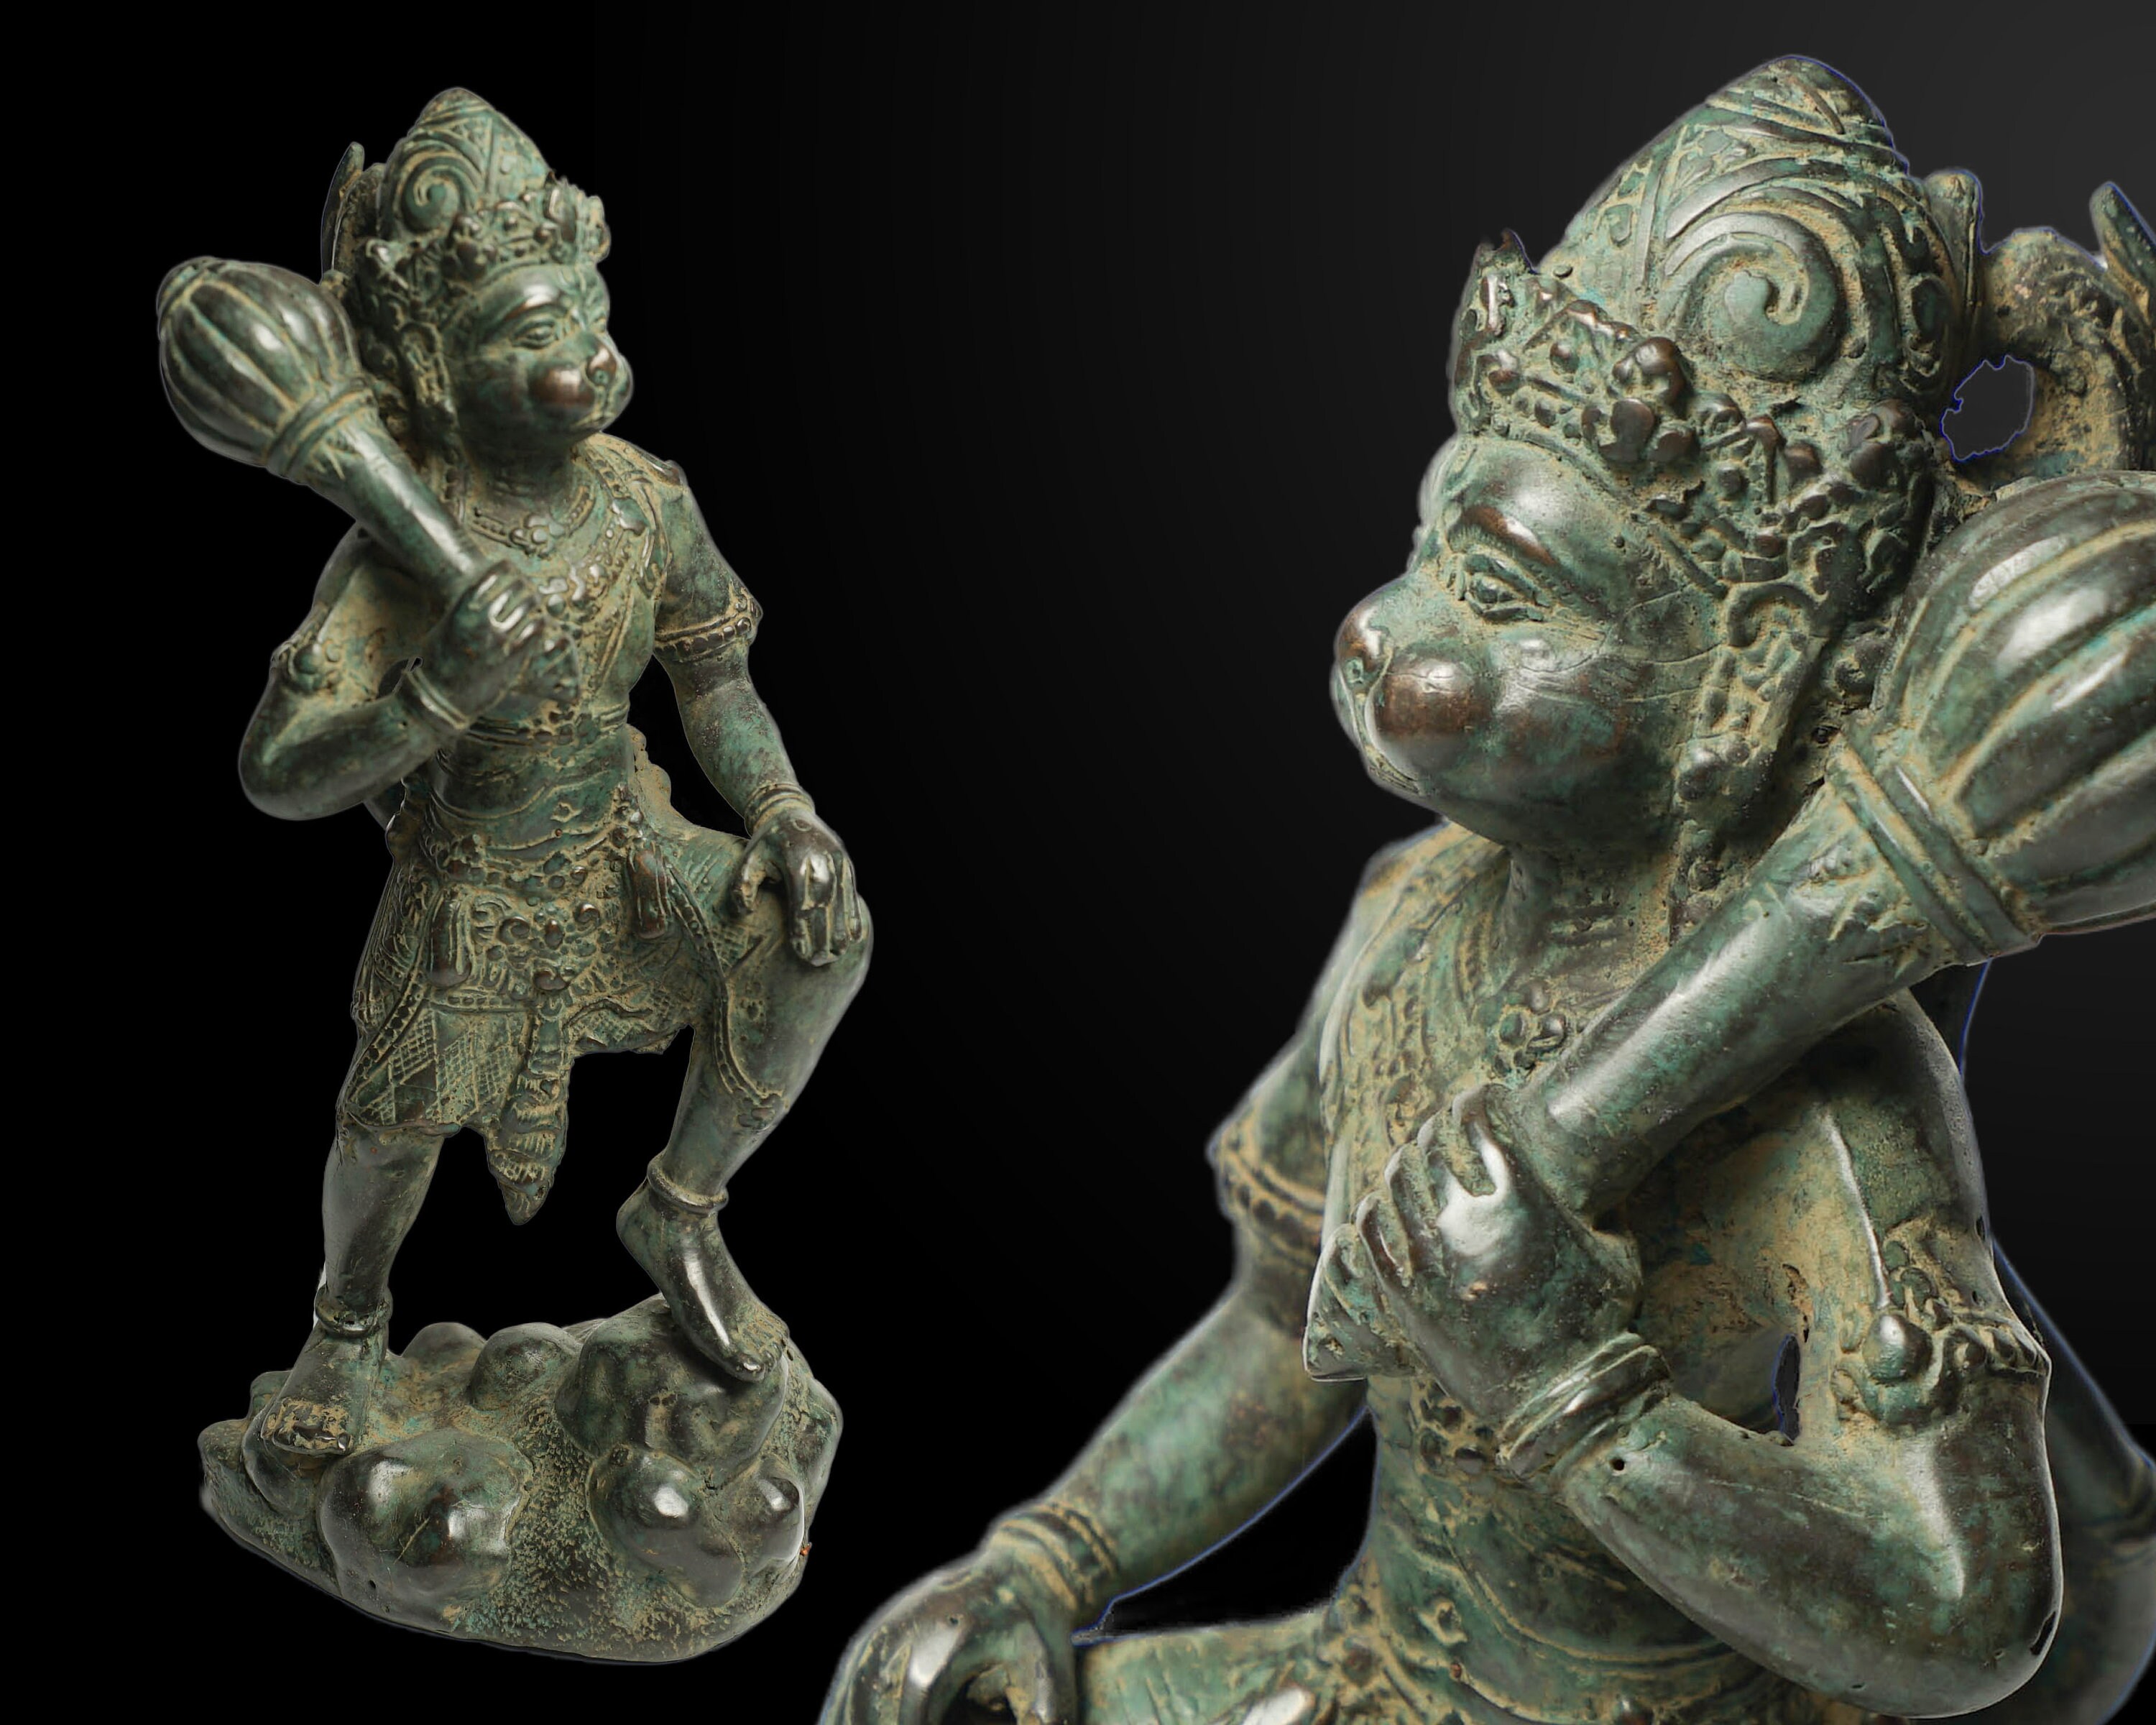 Lord Hanuman Statue 12 Inch , Bajrangbali Idol Ram Bhakt Hanuman, Hindu God Of Strength & Power, Cooper